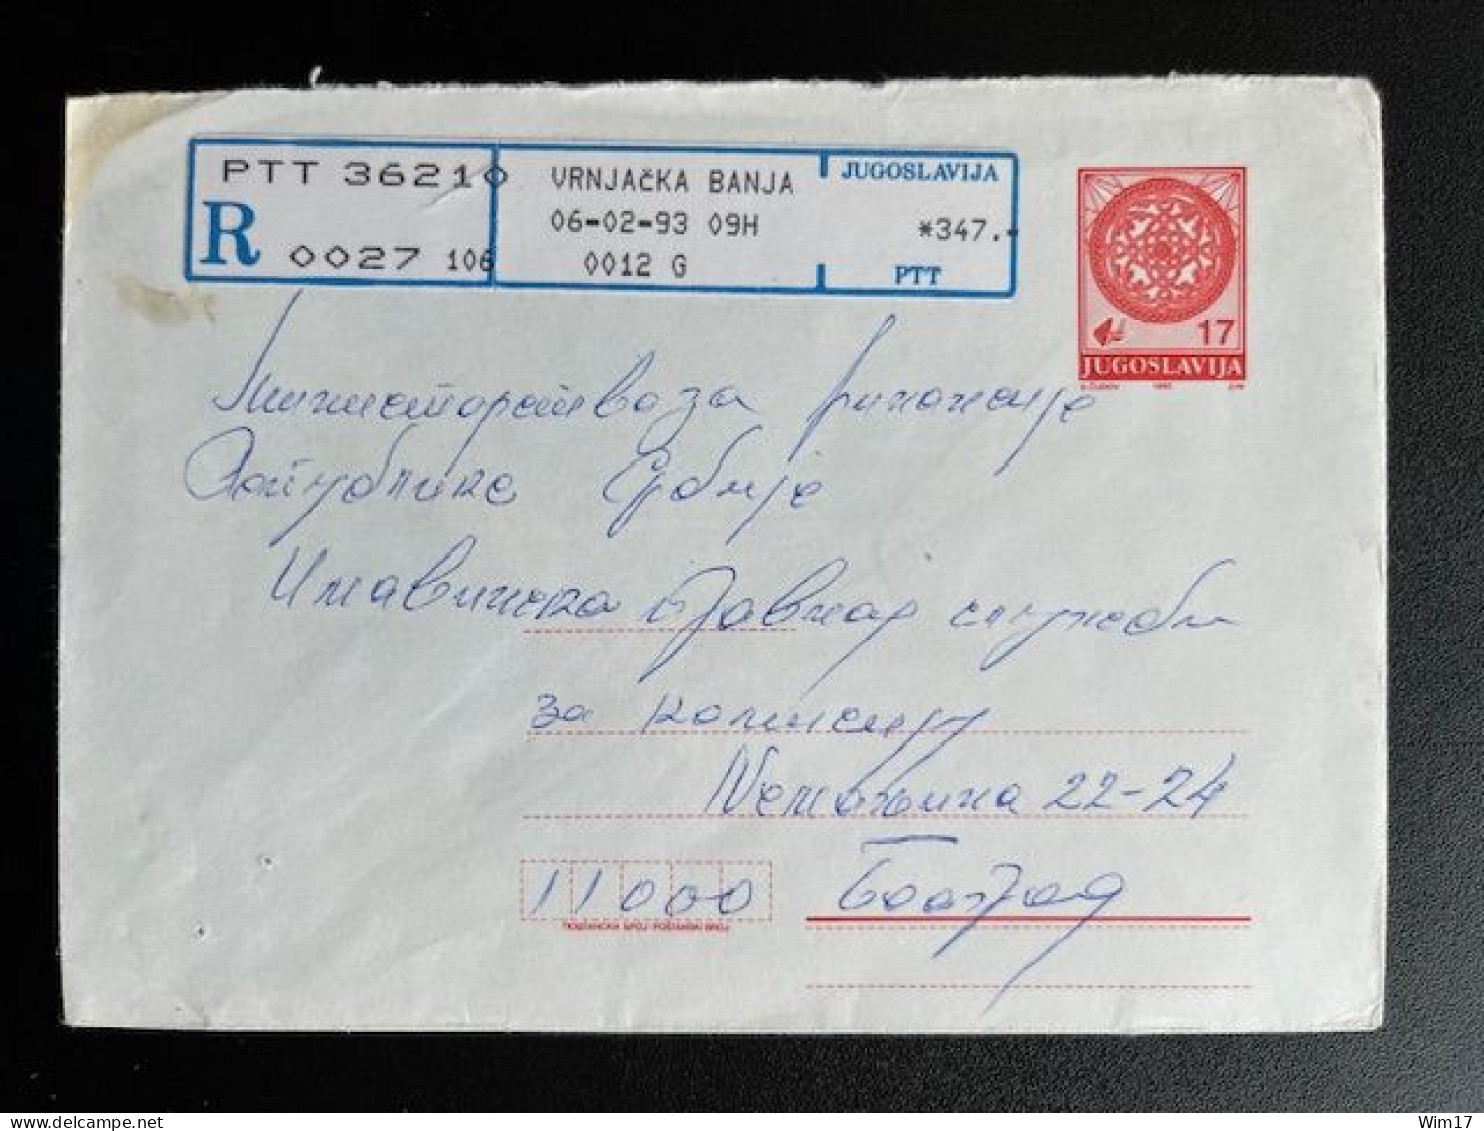 JUGOSLAVIJA YUGOSLAVIA 1993 REGISTERED LETTER VRNJACKA BANJA TO BELGRADE BEOGRAD 06-02-1993 - Covers & Documents